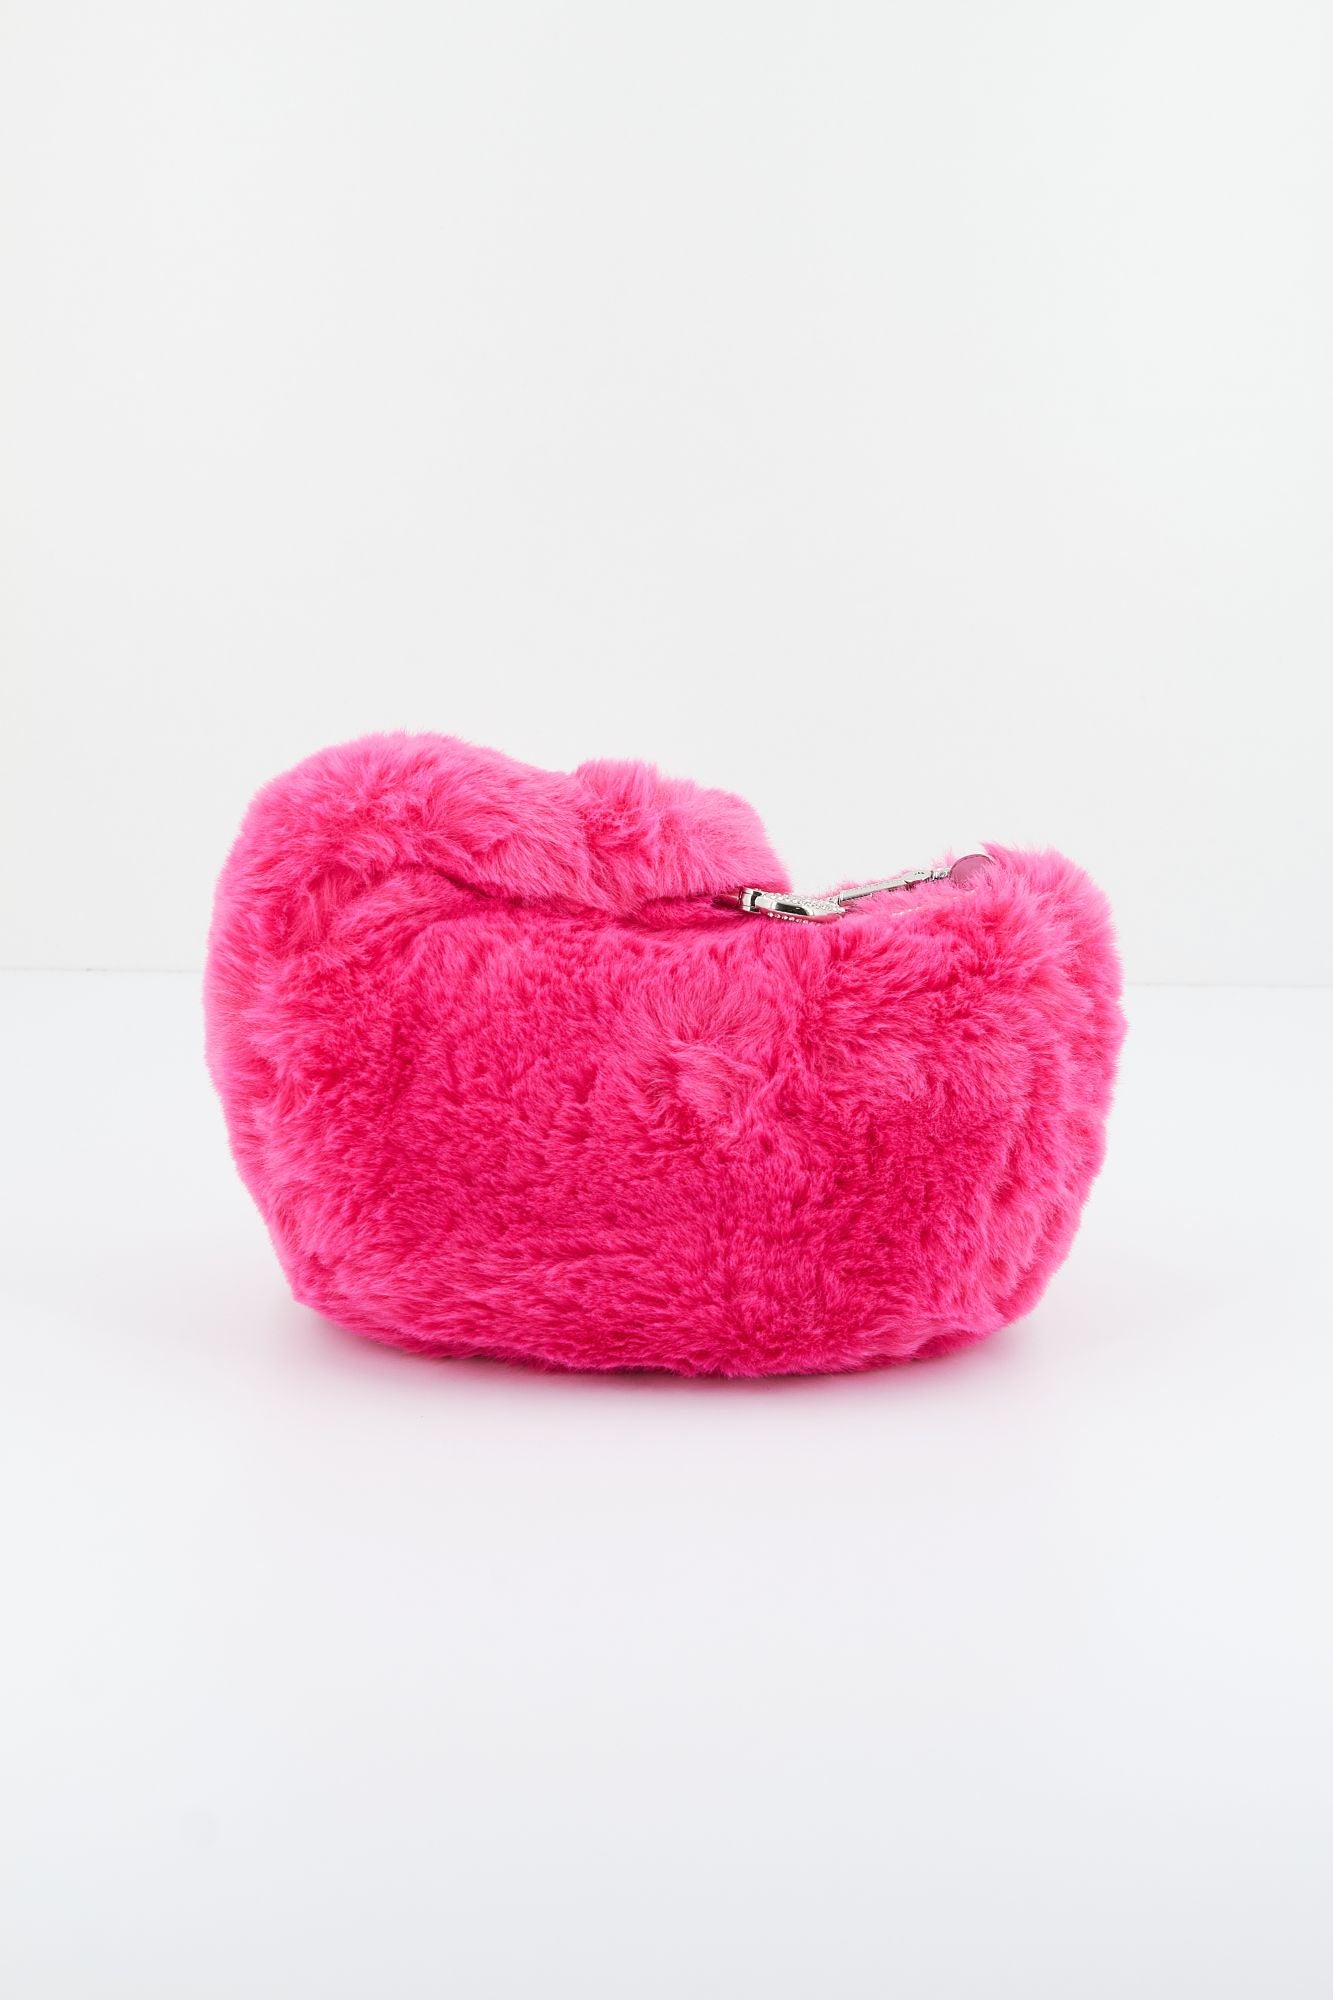 JUICY COUTURE BERRY SMALL HOBO BAG en color ROSA (3)